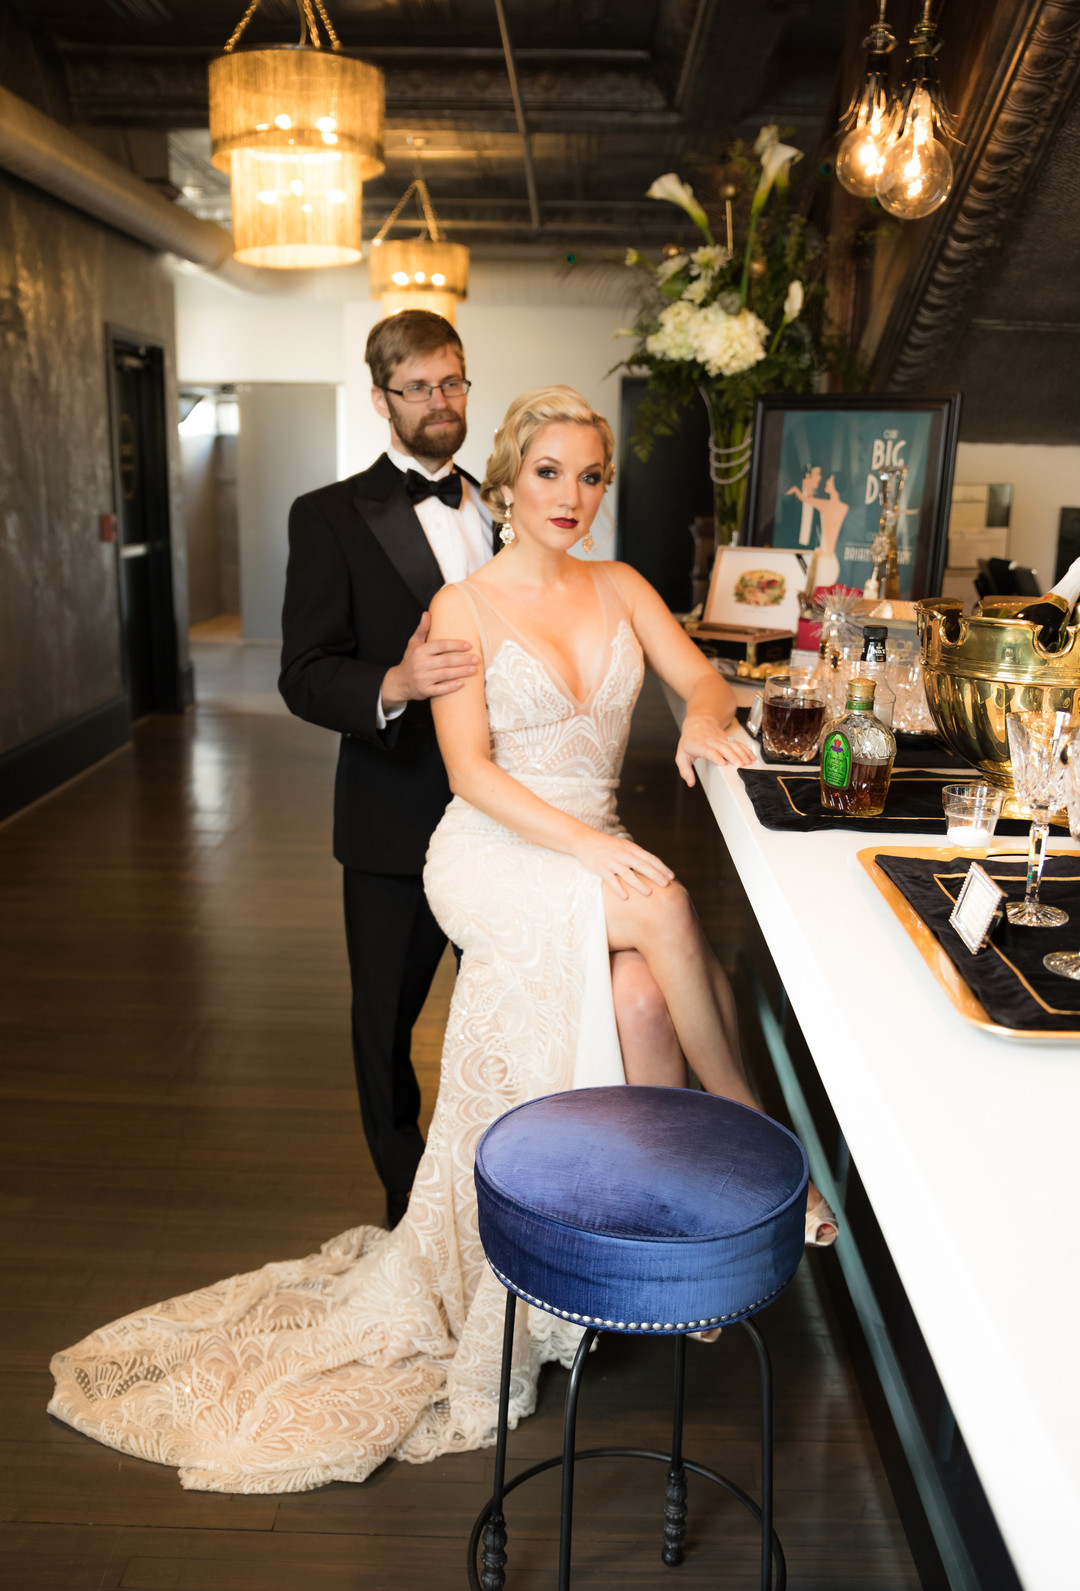 Great Gatsby Wedding Inspiration | Bride